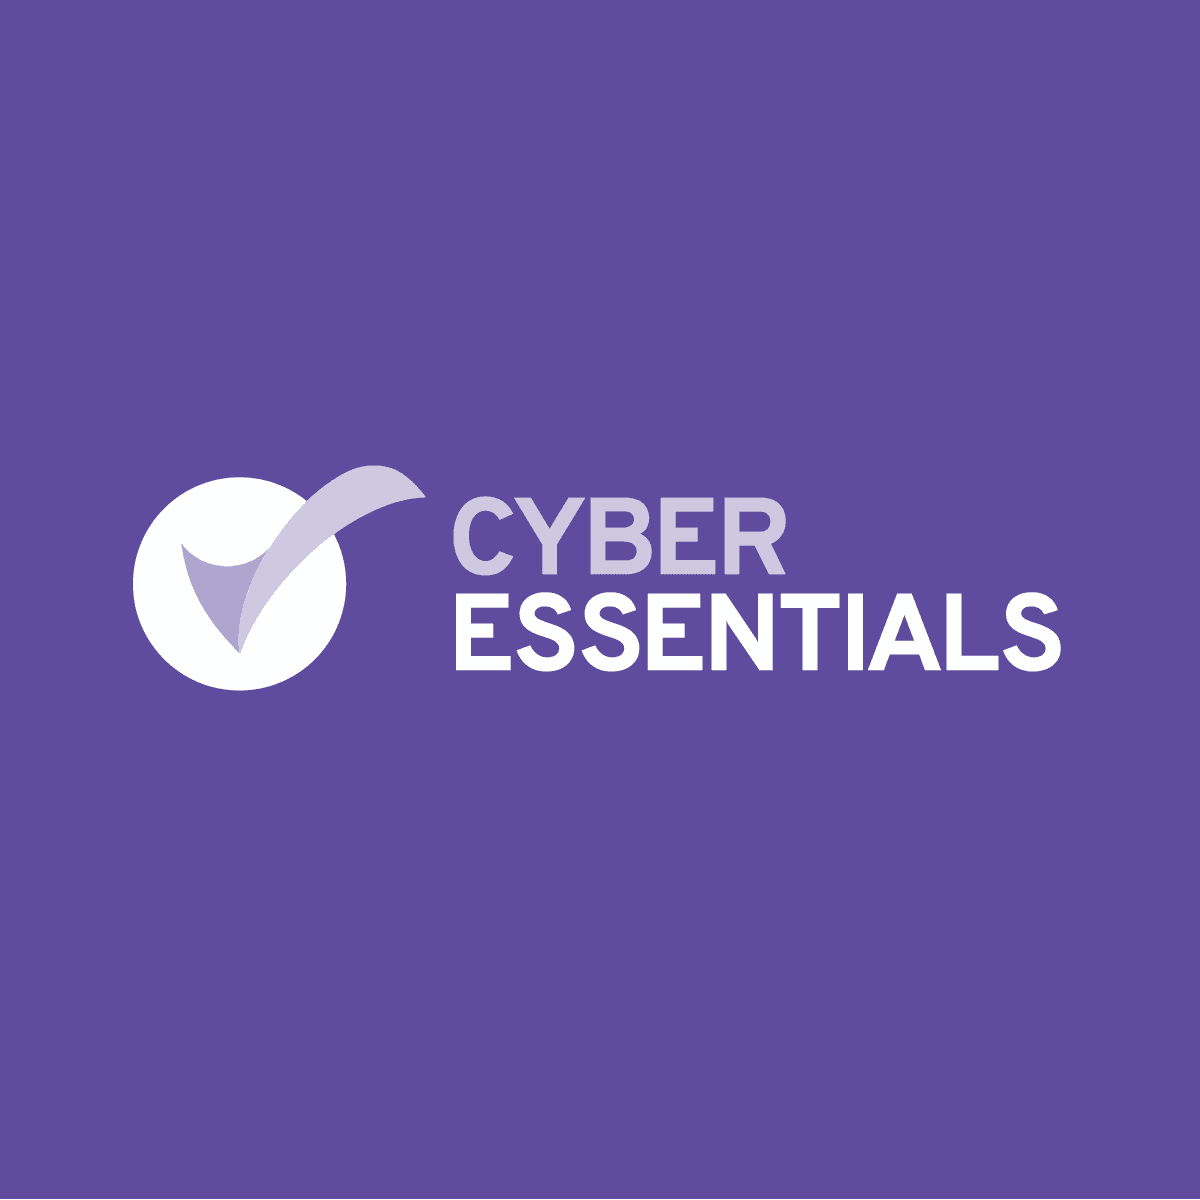 Cyber Essentials logo on purple